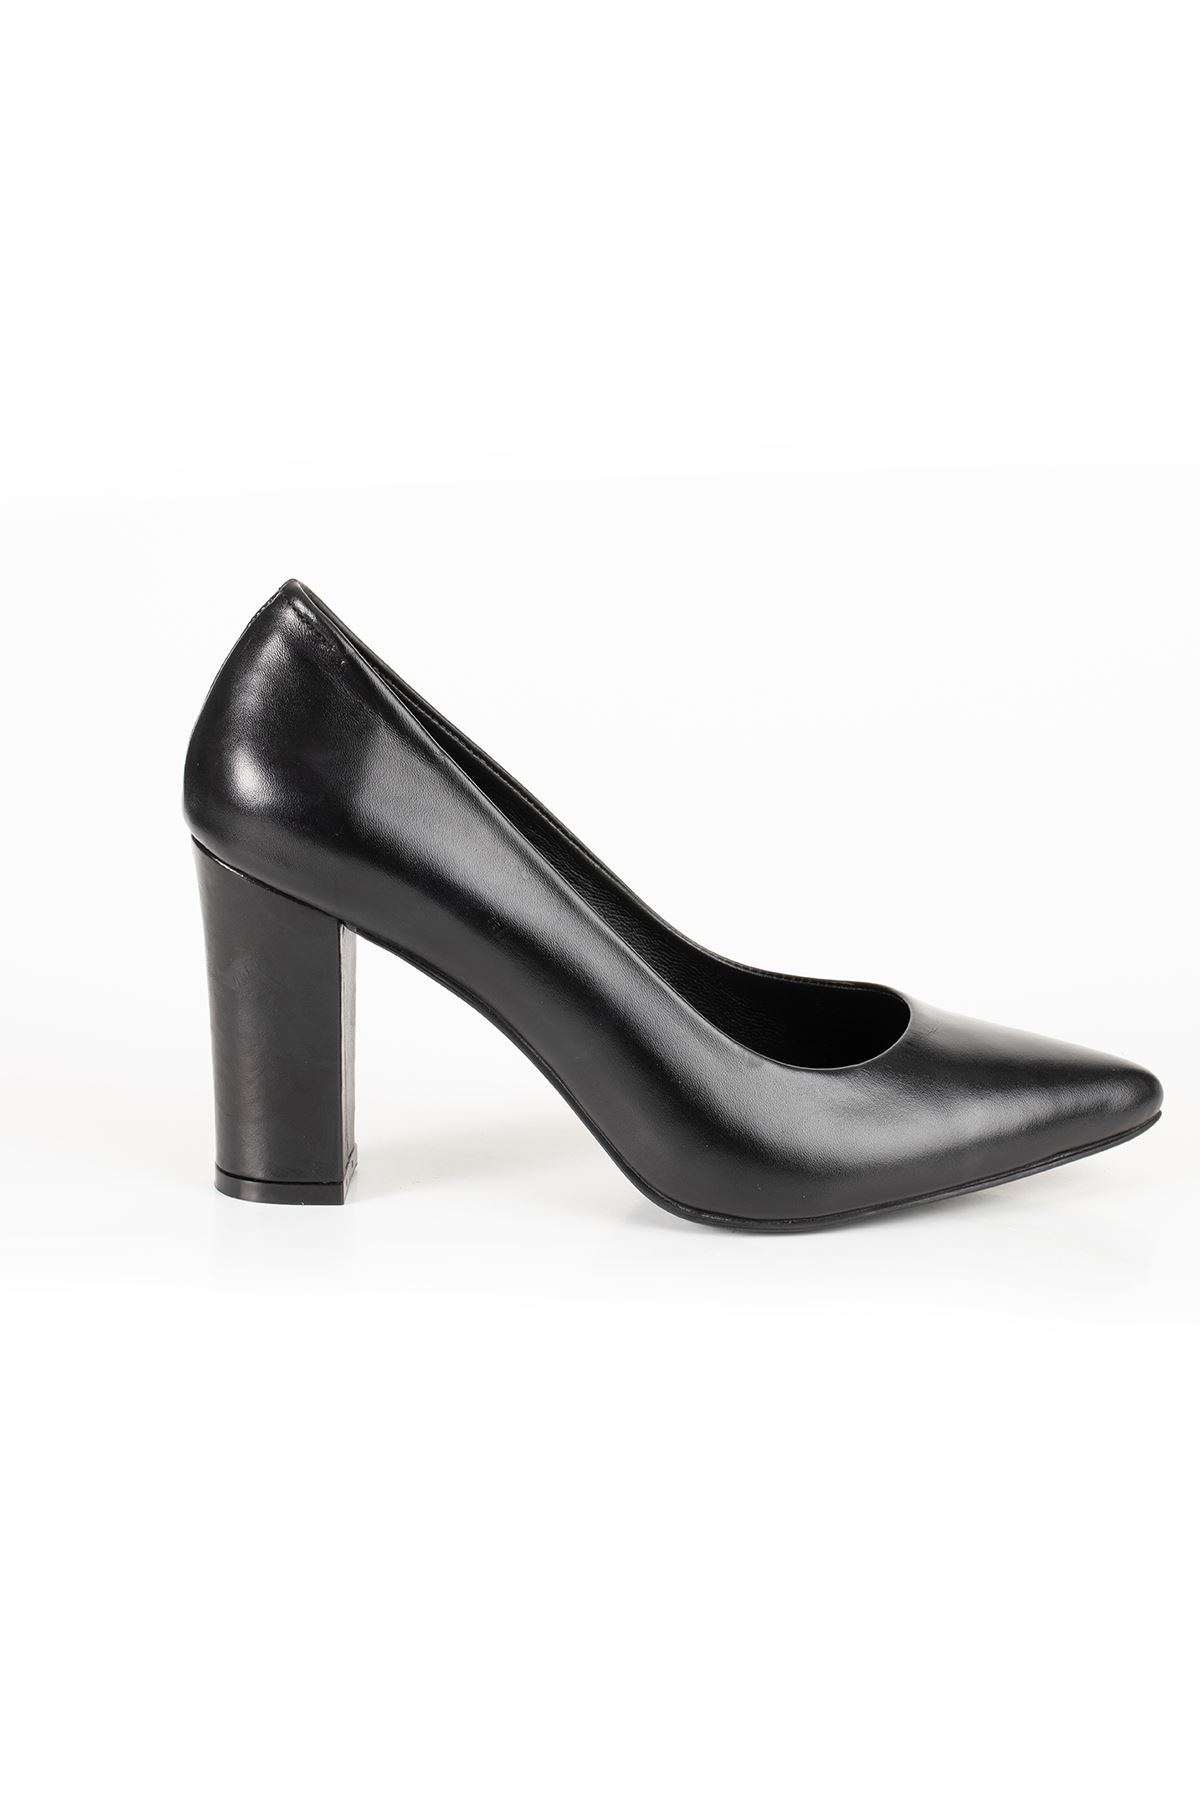 Kadın Topuklu Ayakkabı Perla Gate Shoes -Siyah